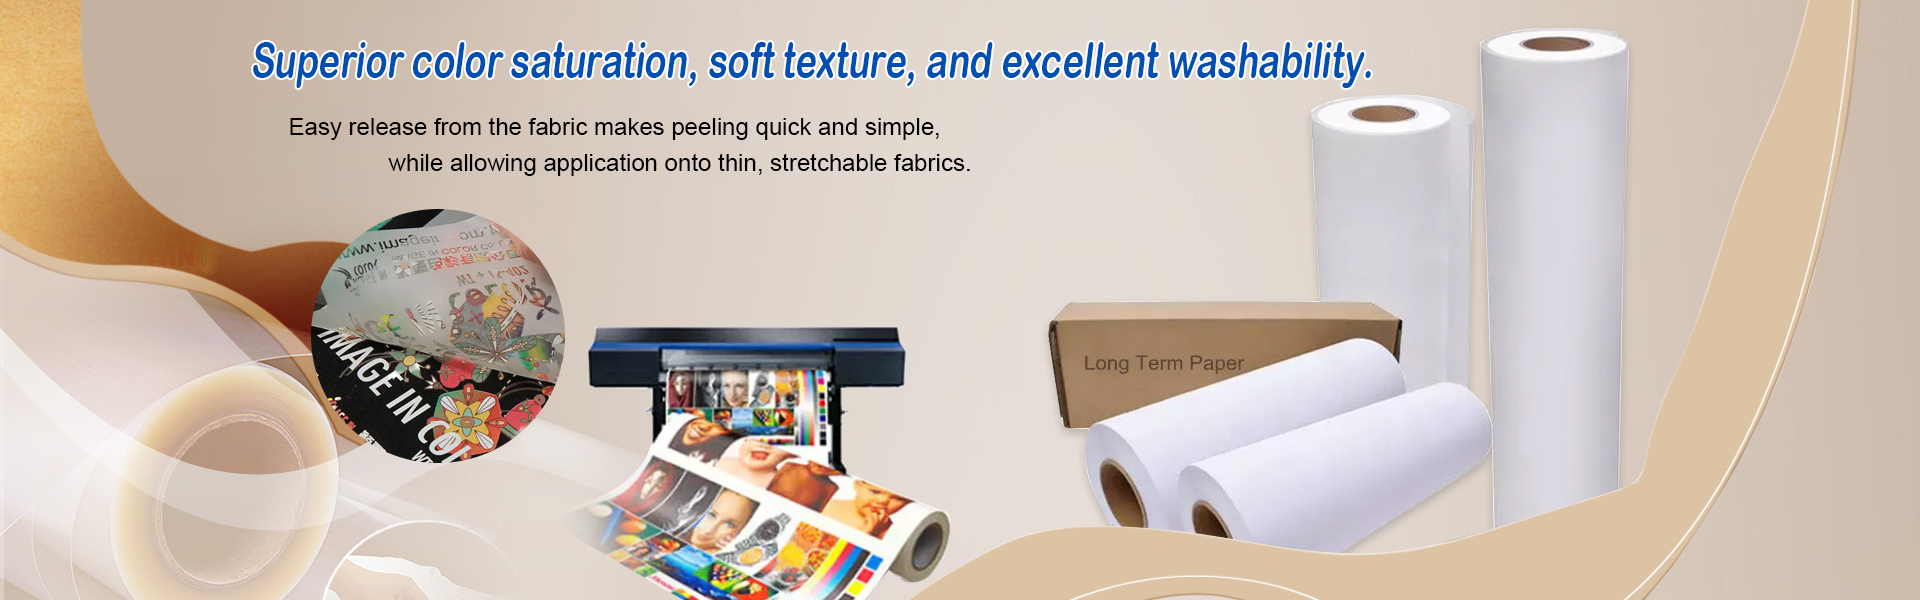 Varmeoverførselspapir, sublimeringspapir, digitalt printerpapir,Suzhou Huarong Paper Products Co., Ltd